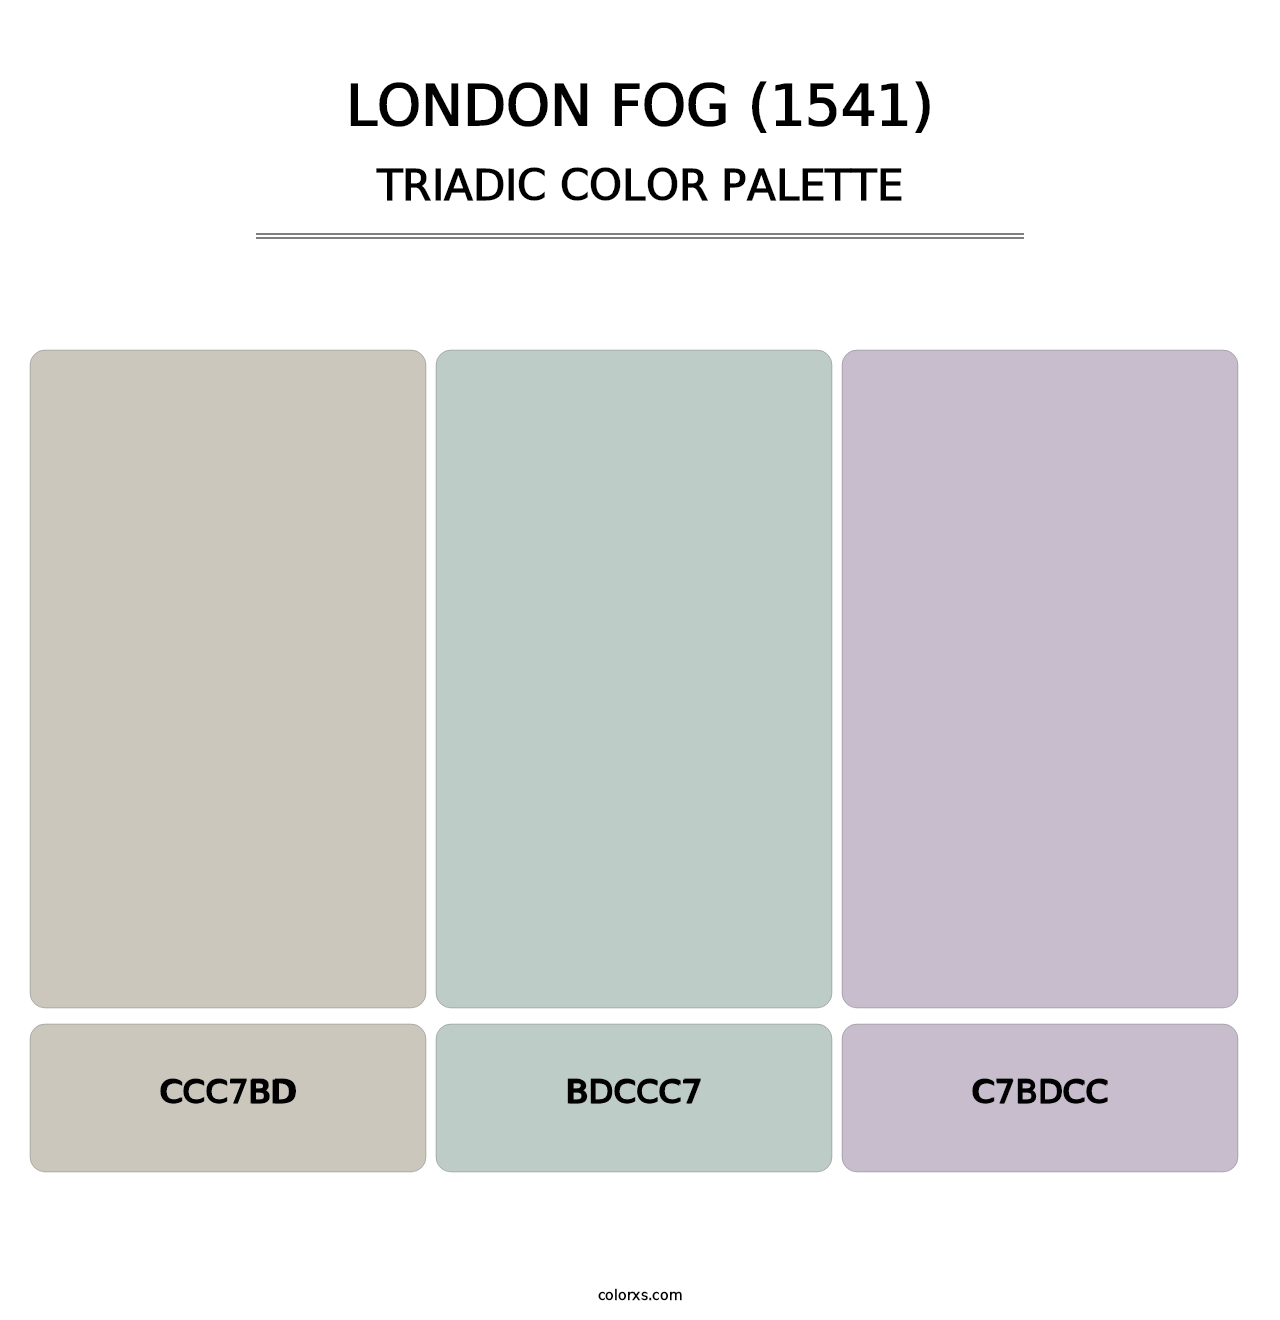 London Fog (1541) - Triadic Color Palette